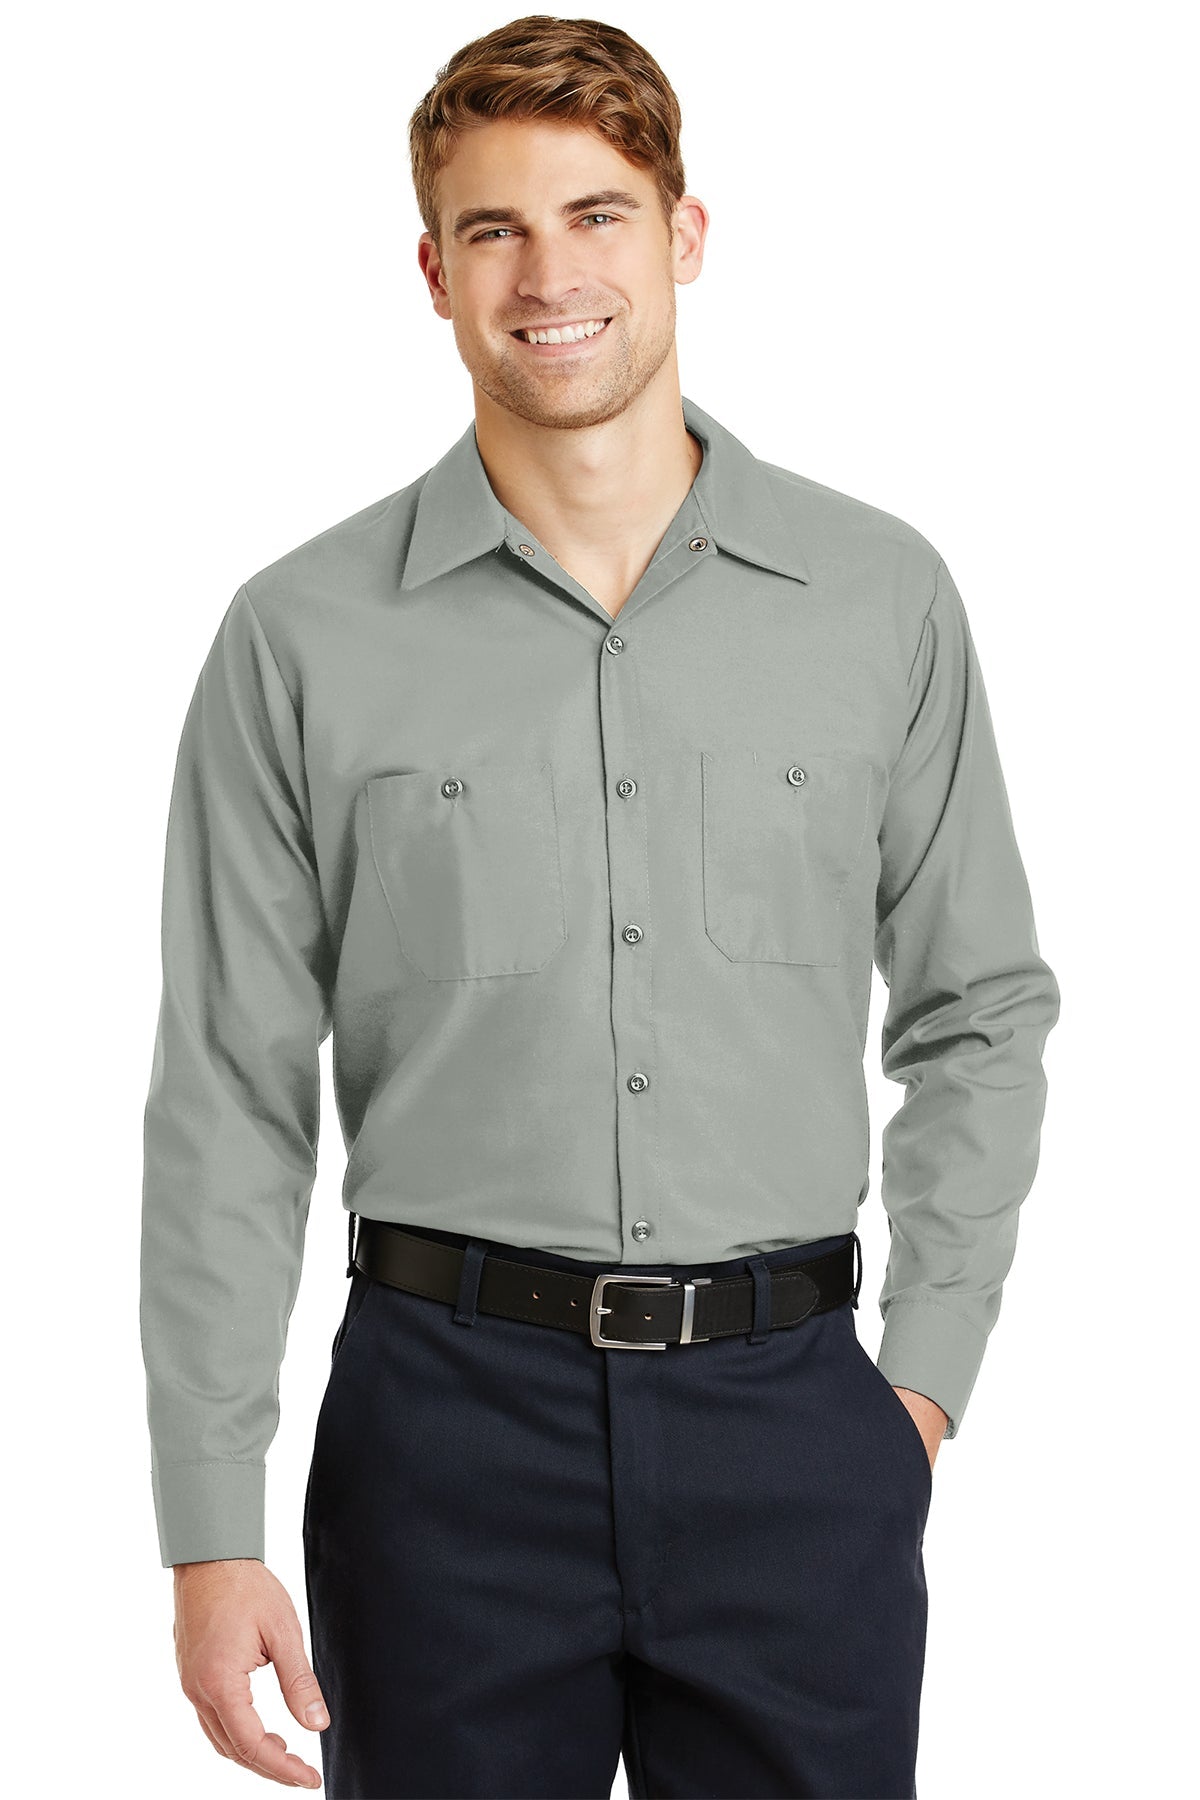 SP14 Red Kap® Long Sleeve Industrial Work Shirt